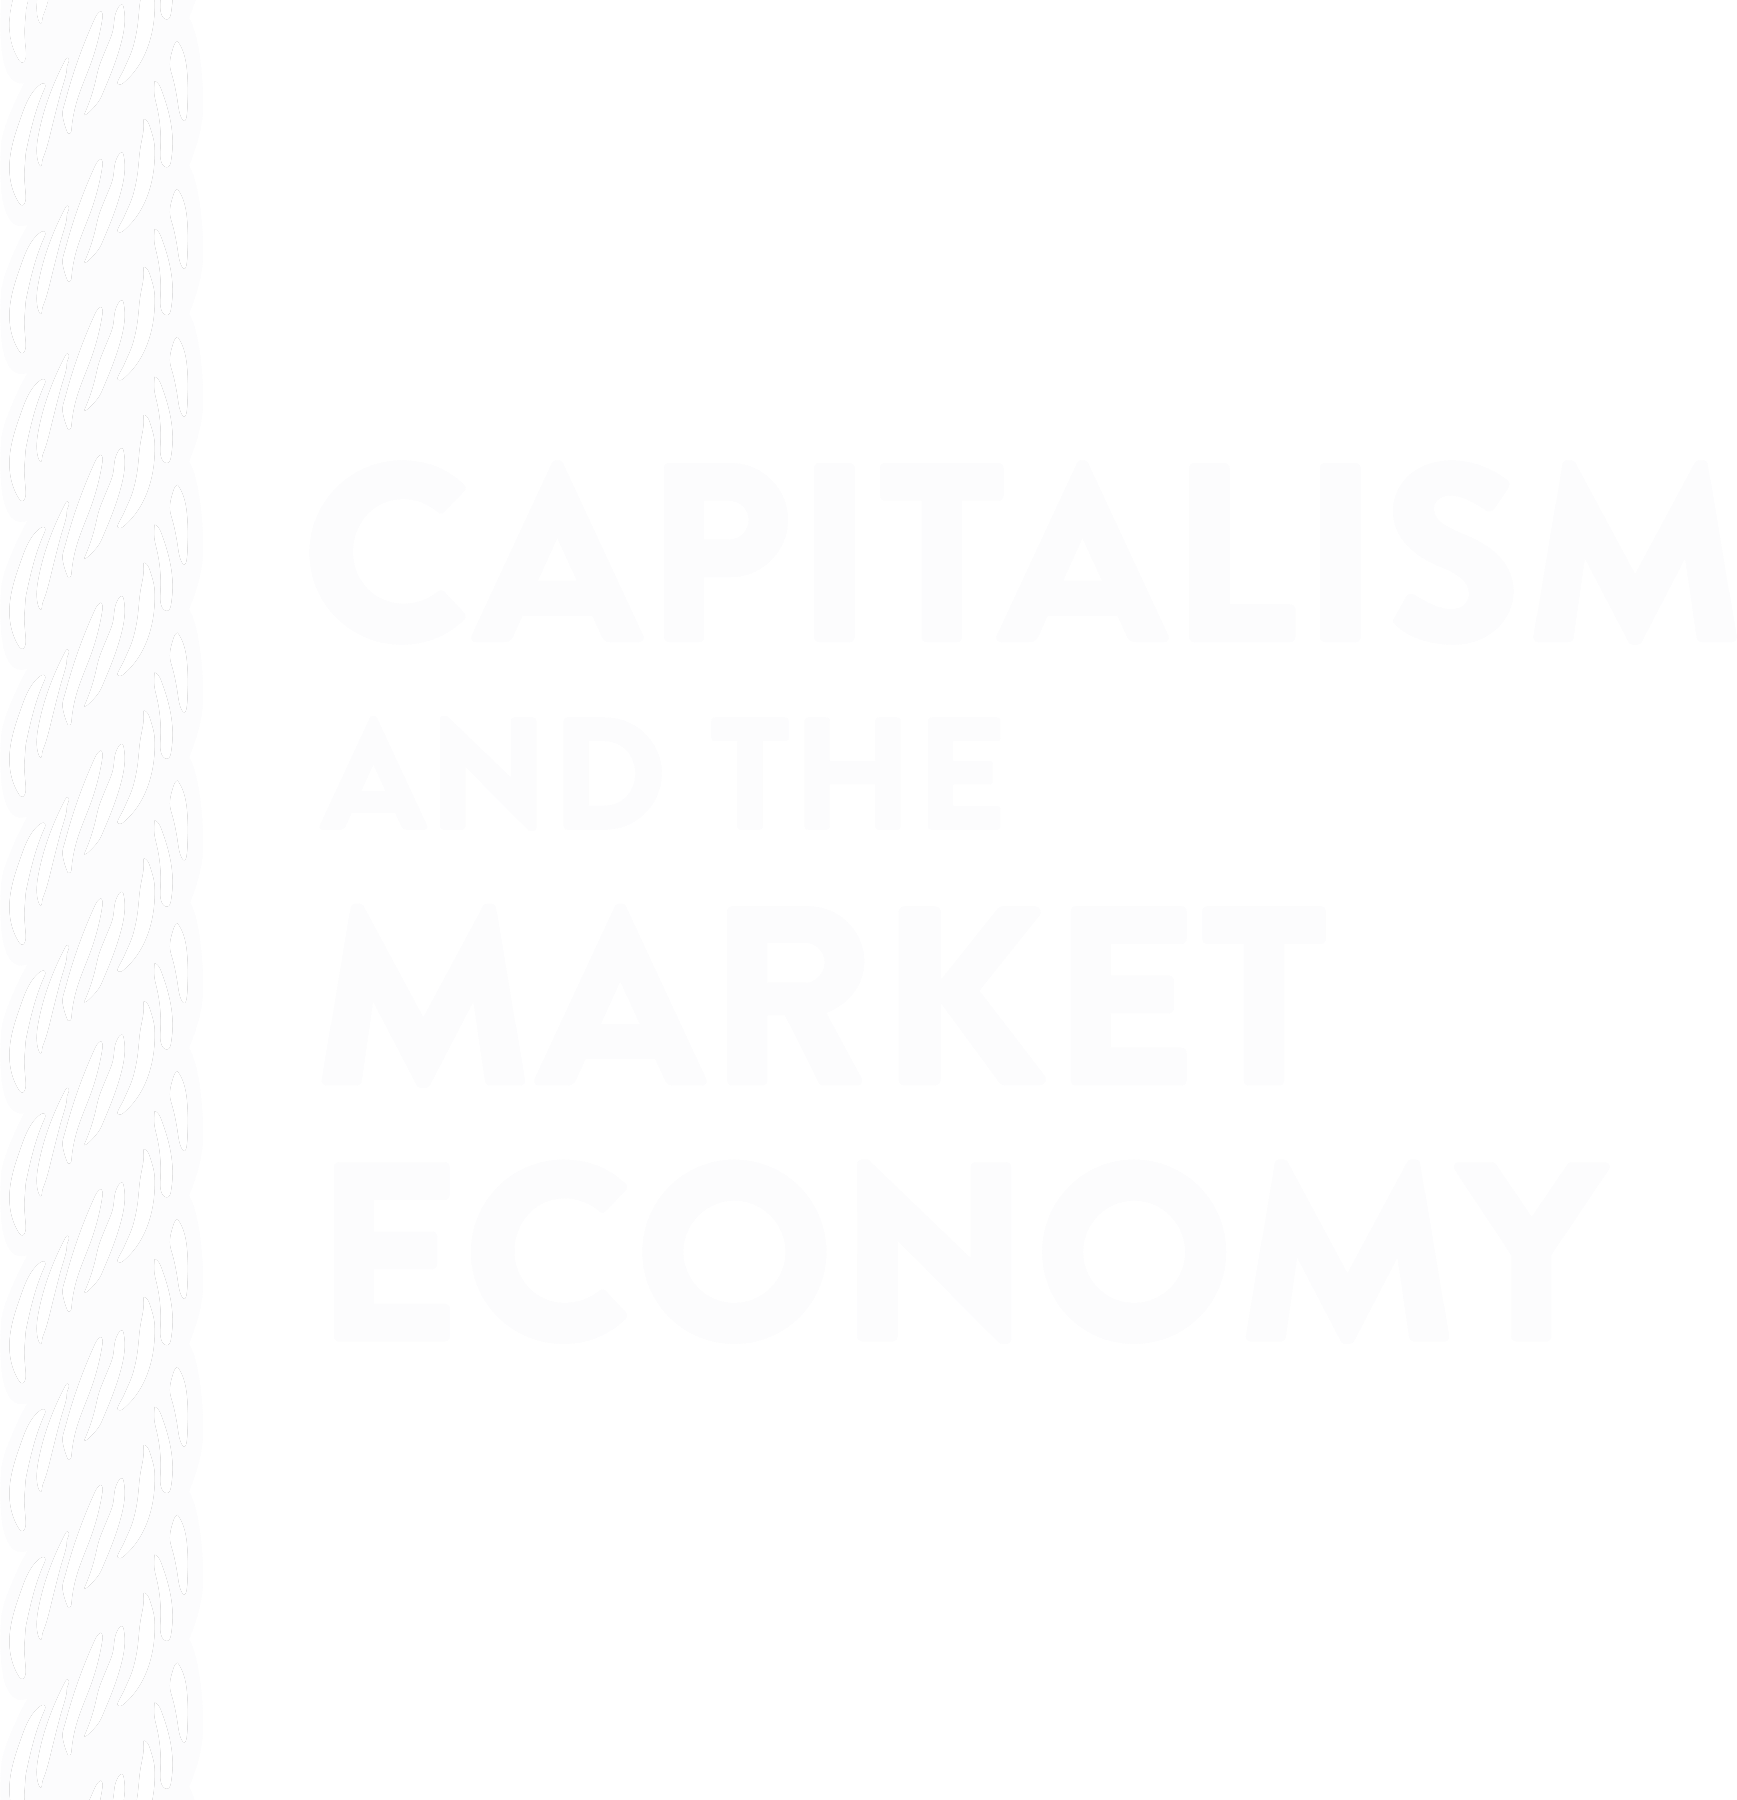 Capitalism and the Market Economy